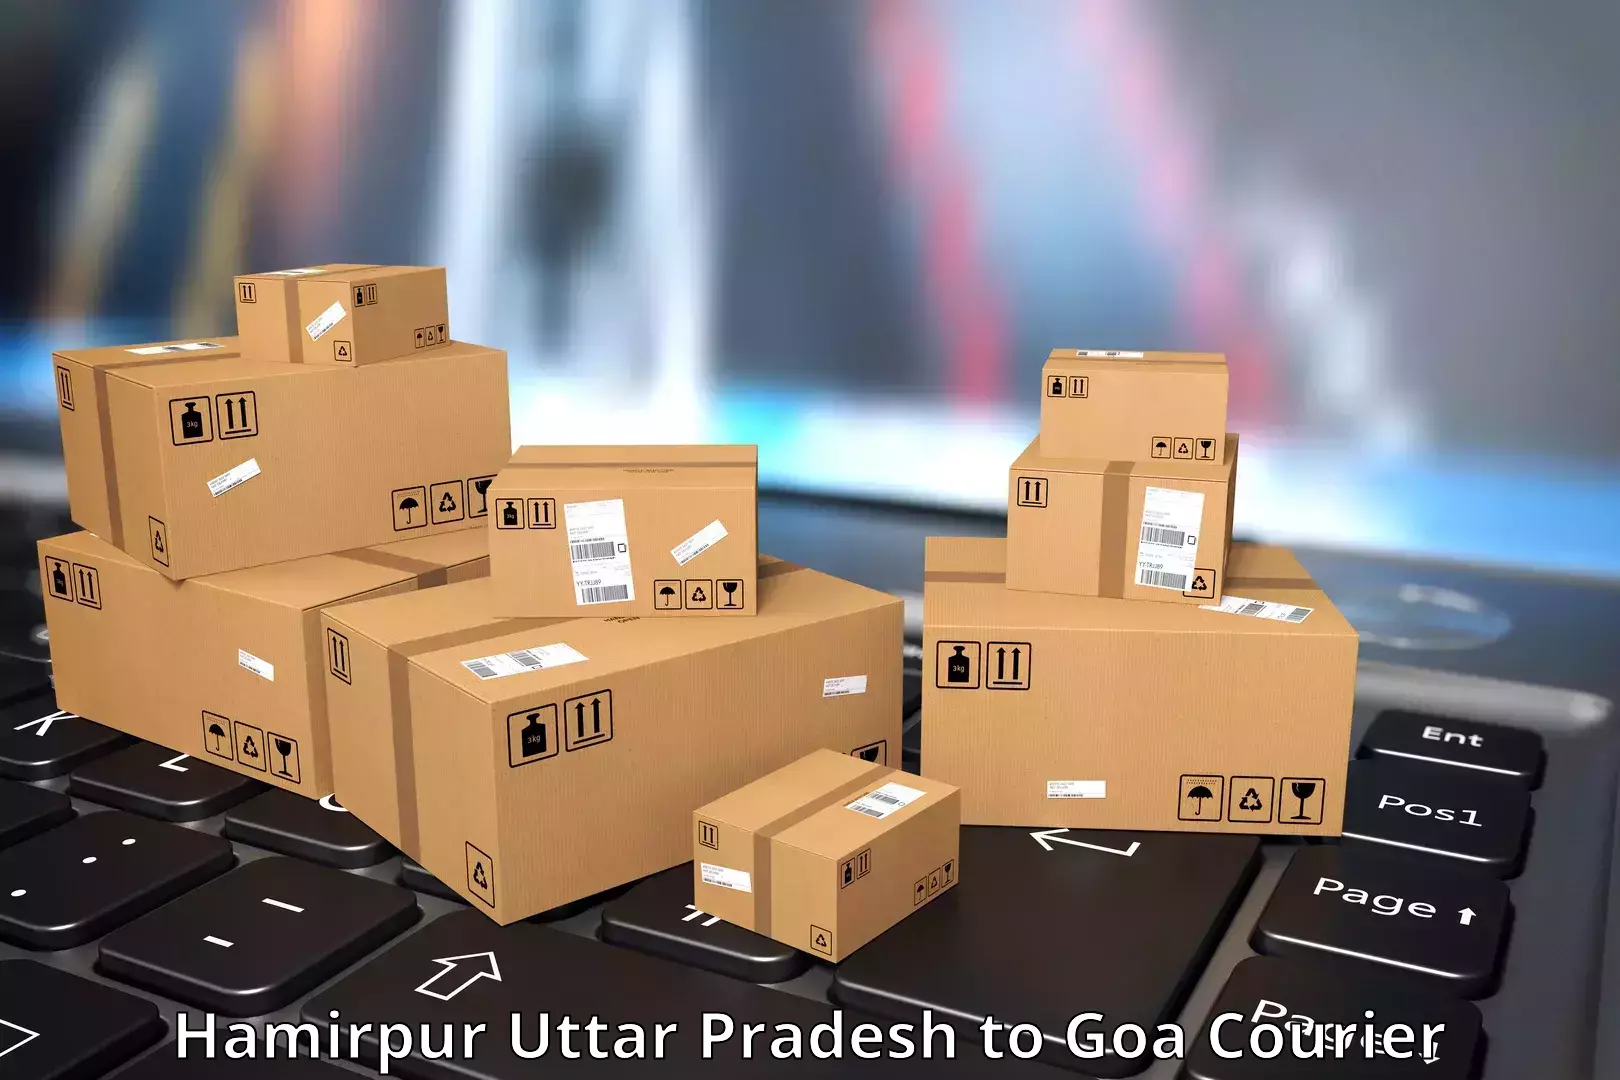 Express logistics service Hamirpur Uttar Pradesh to Goa